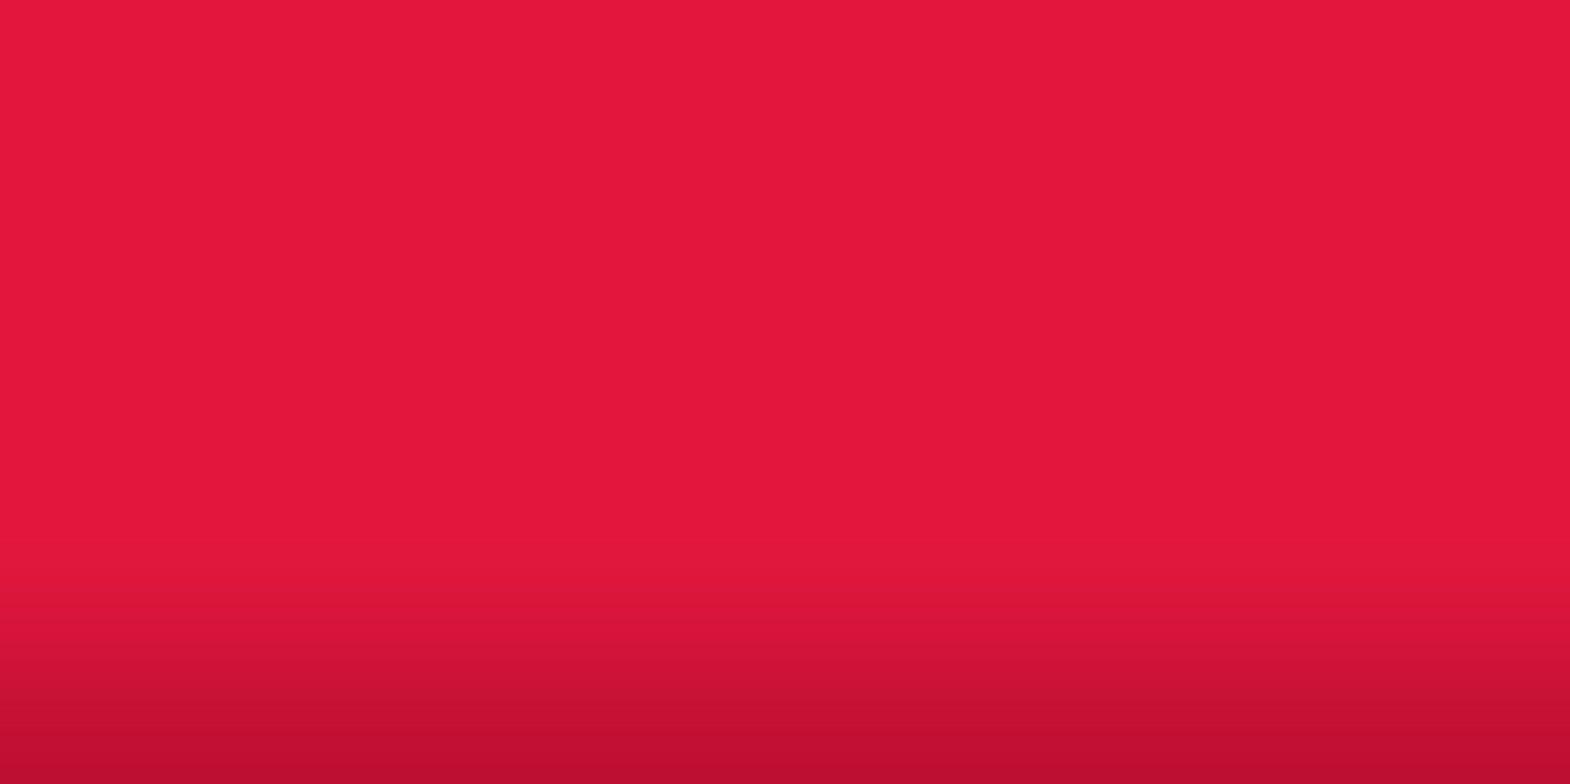 Free Red Pink Wallpaper  Download in JPG  Templatenet